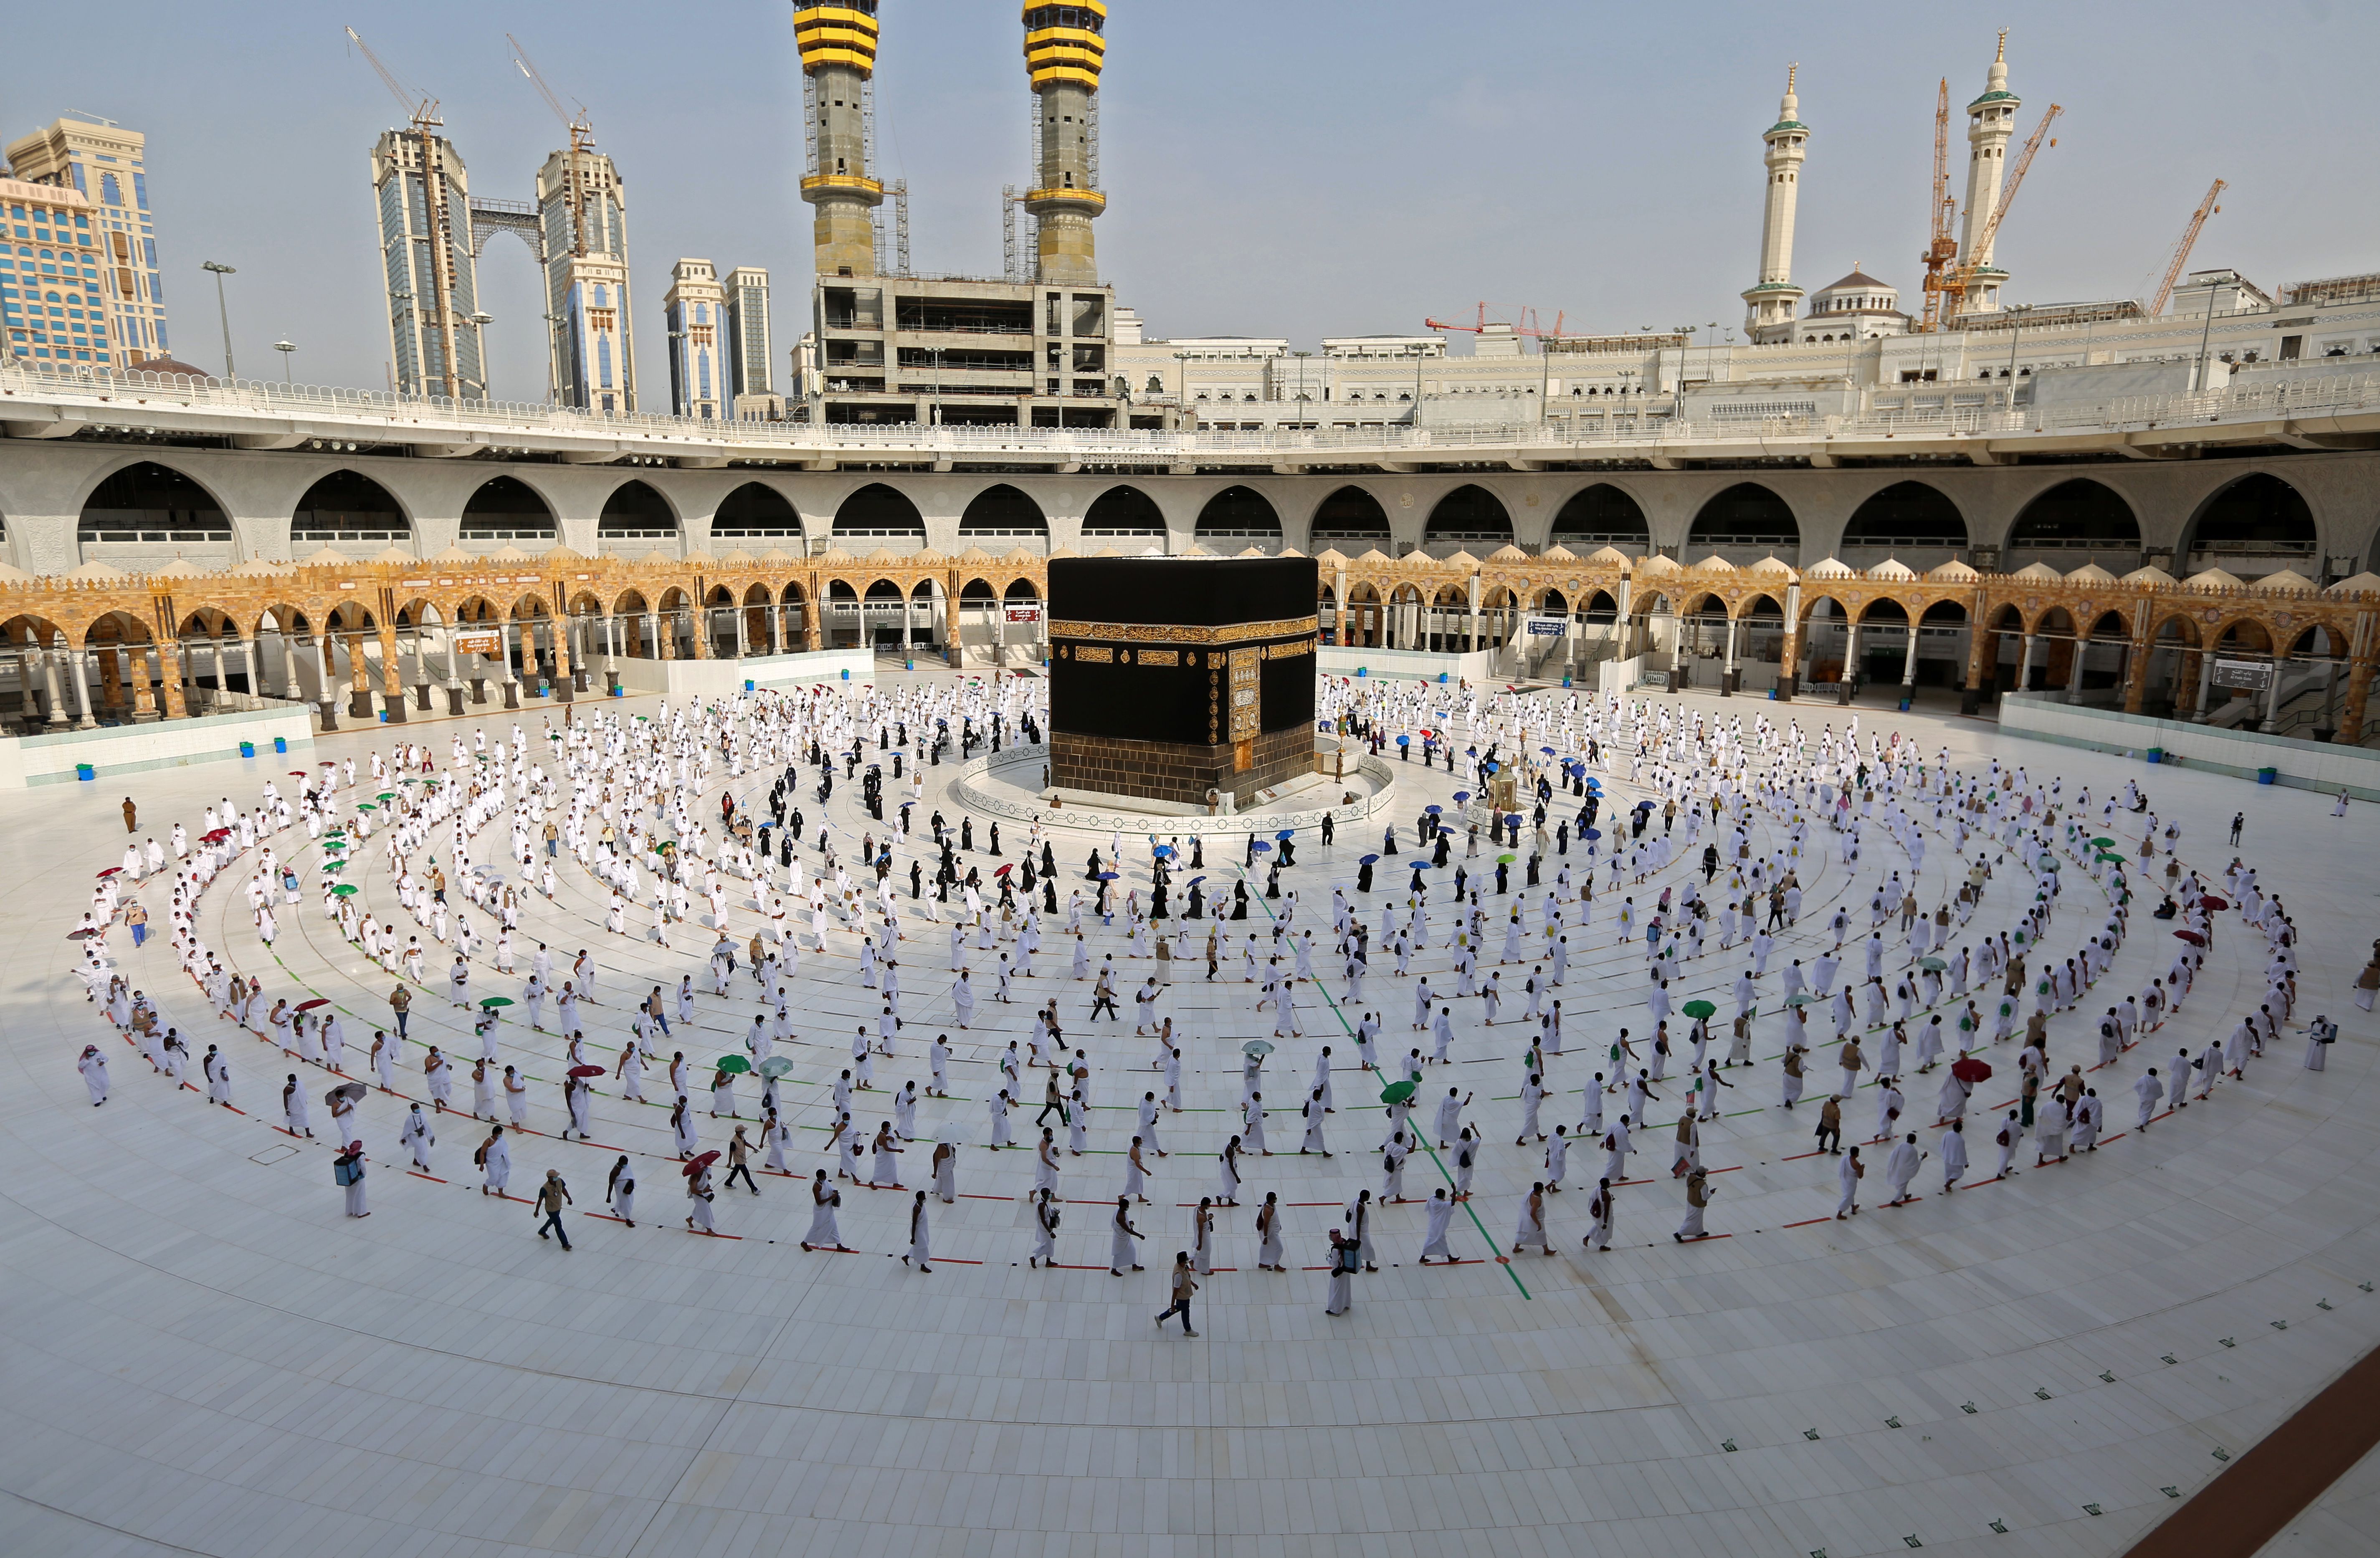 Прямой эфир мекка кааба. Аль-харам в Мекке. Саудовская Аравия Мекка хадж. Масджид Аль харам 2020. Заповедная мечеть (Масджид Аль-харам) в Мекке.